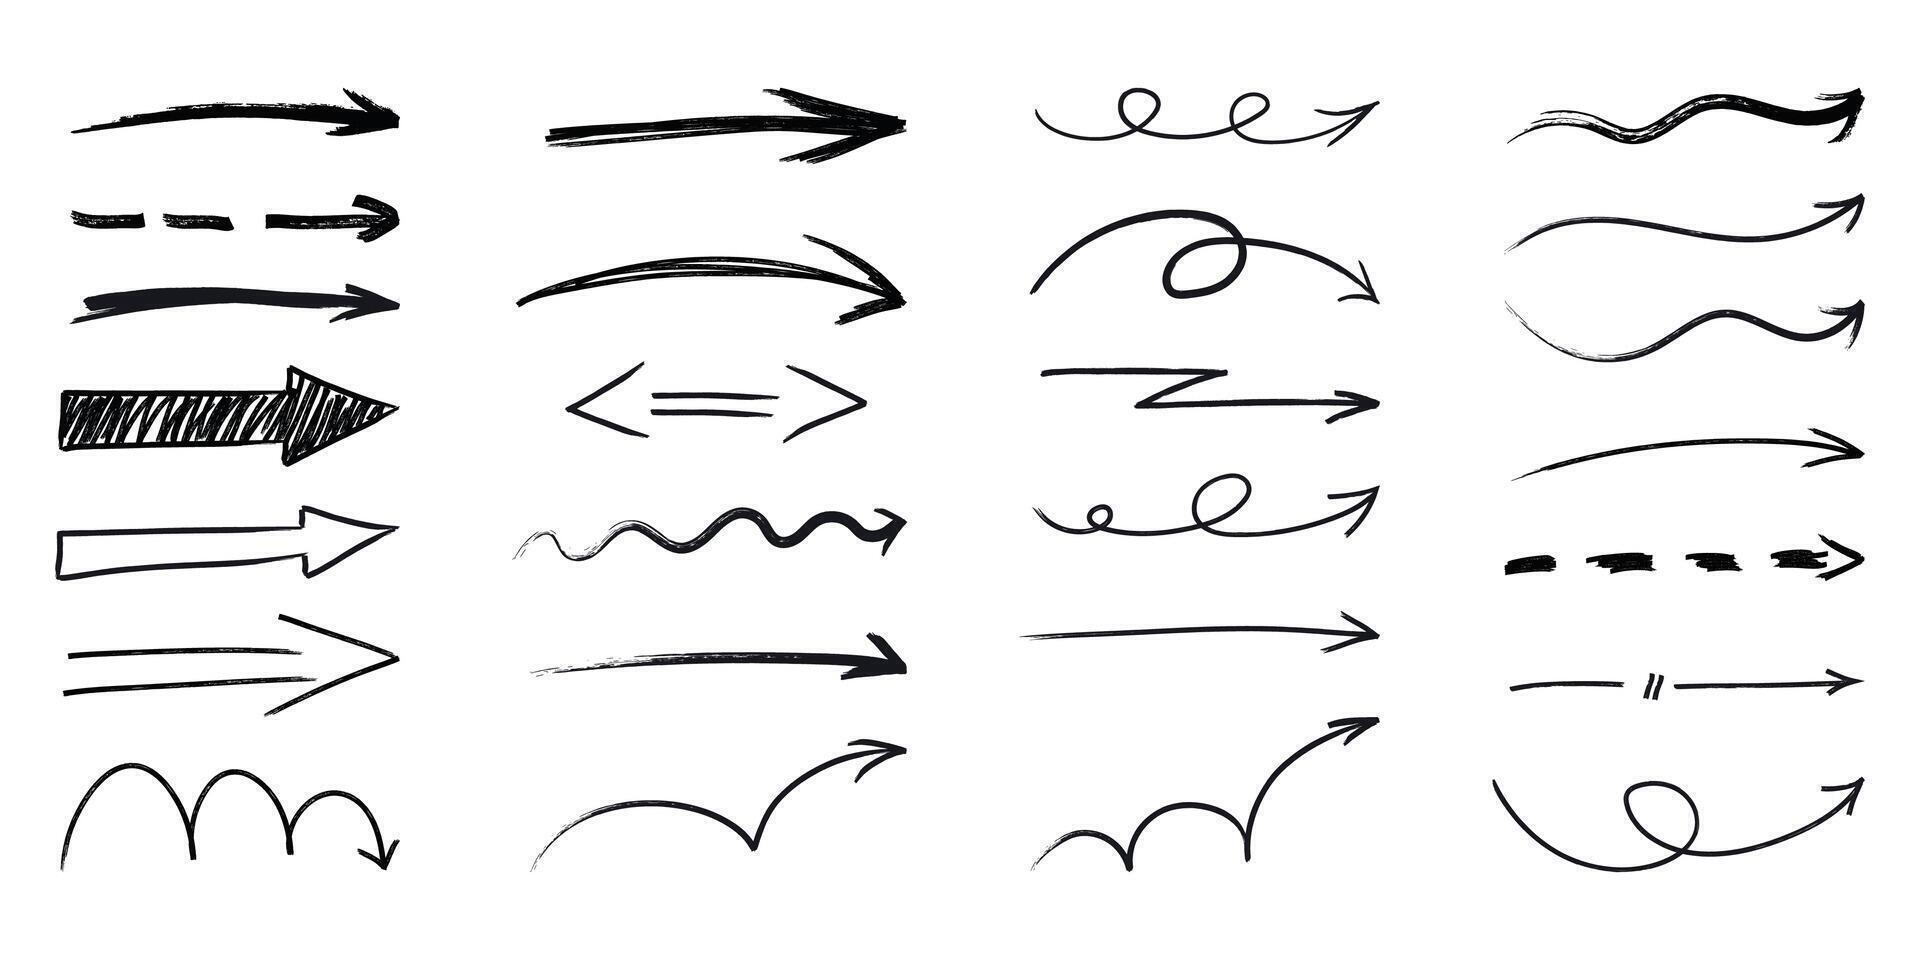 Set isolated hand drawn different scribble arrows. Black marker, pen brush stroke graphic element. Grunge textured text underline, emphasis mark. Vector illustration